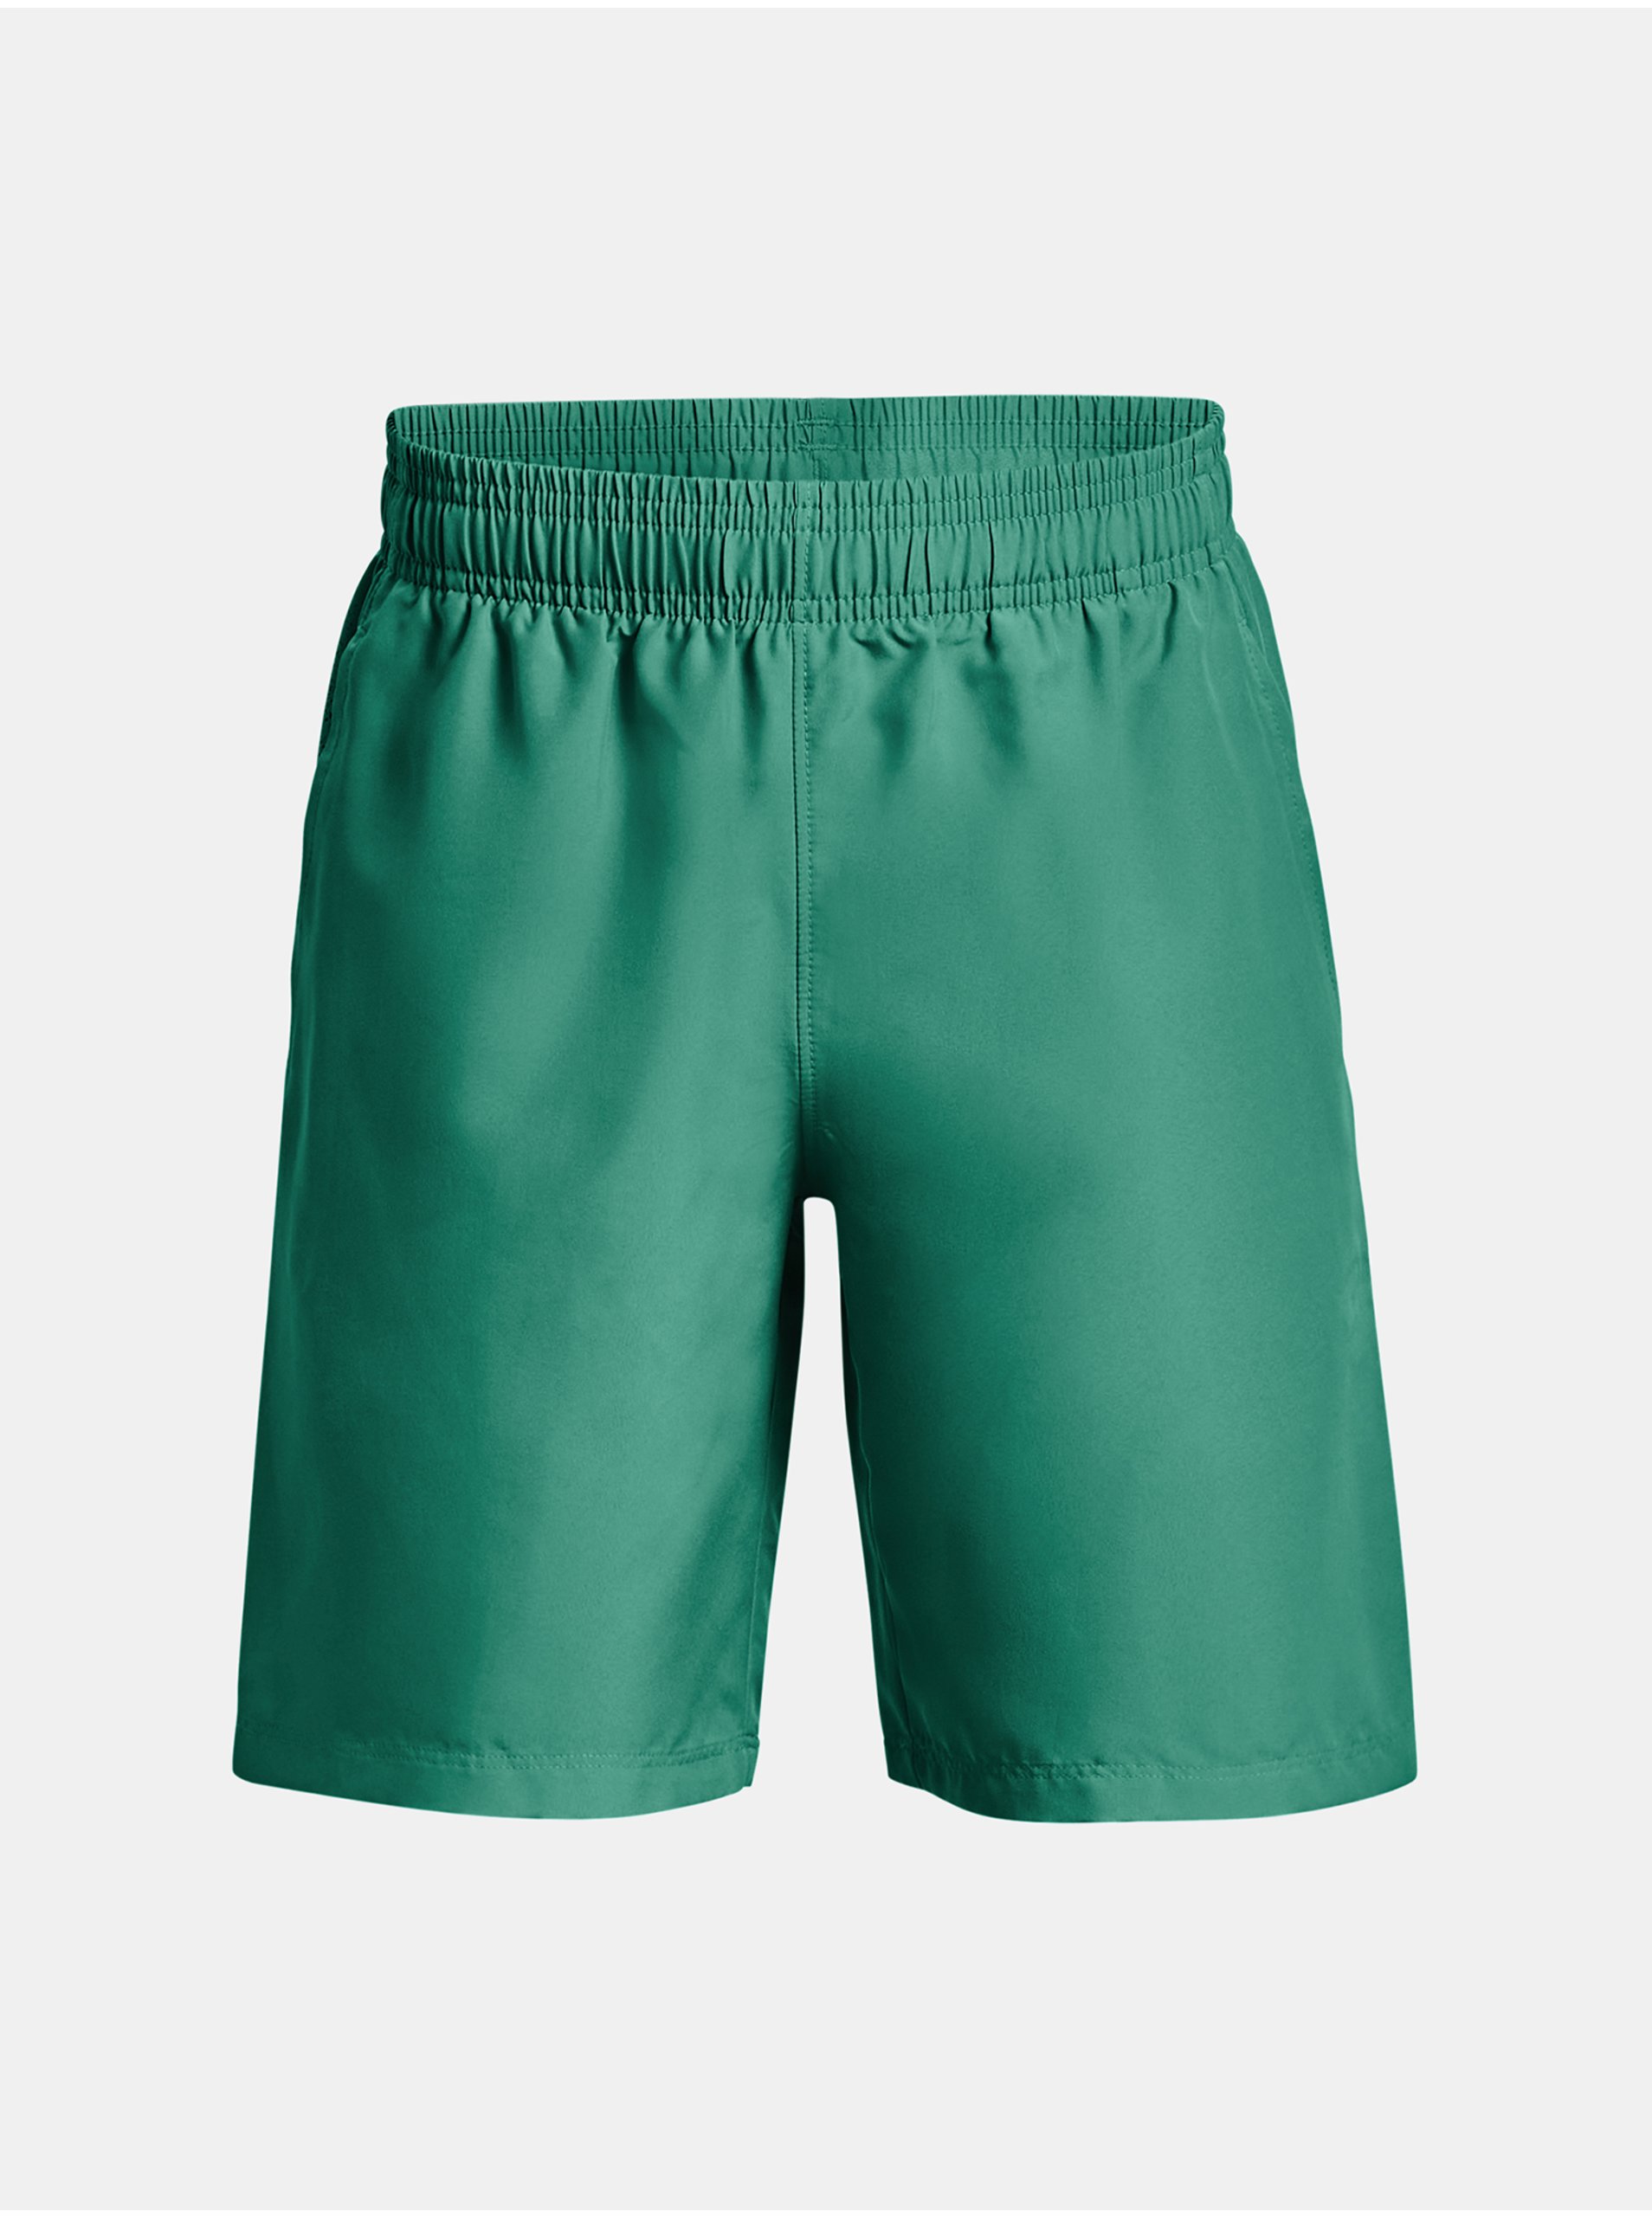 Lacno Zelené športové šortky Under Armour UA Woven Graphic Shorts